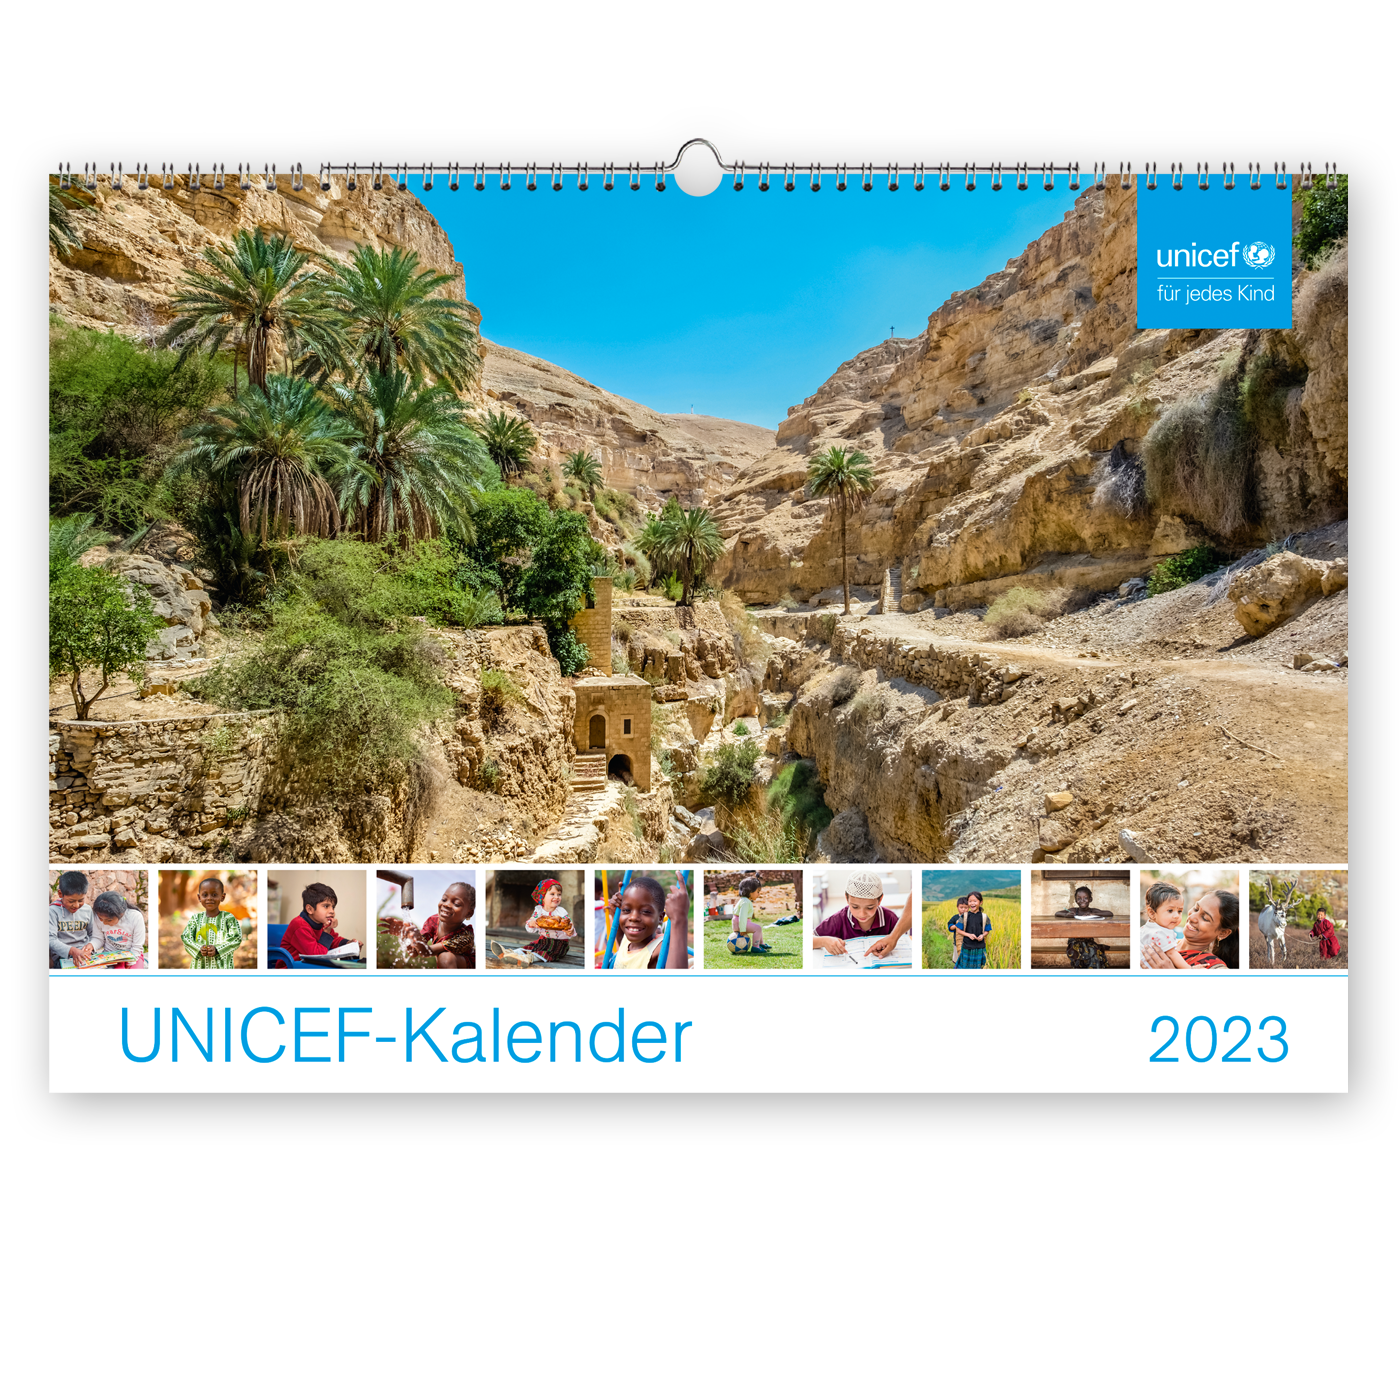 UNICEF-Kalender 2023